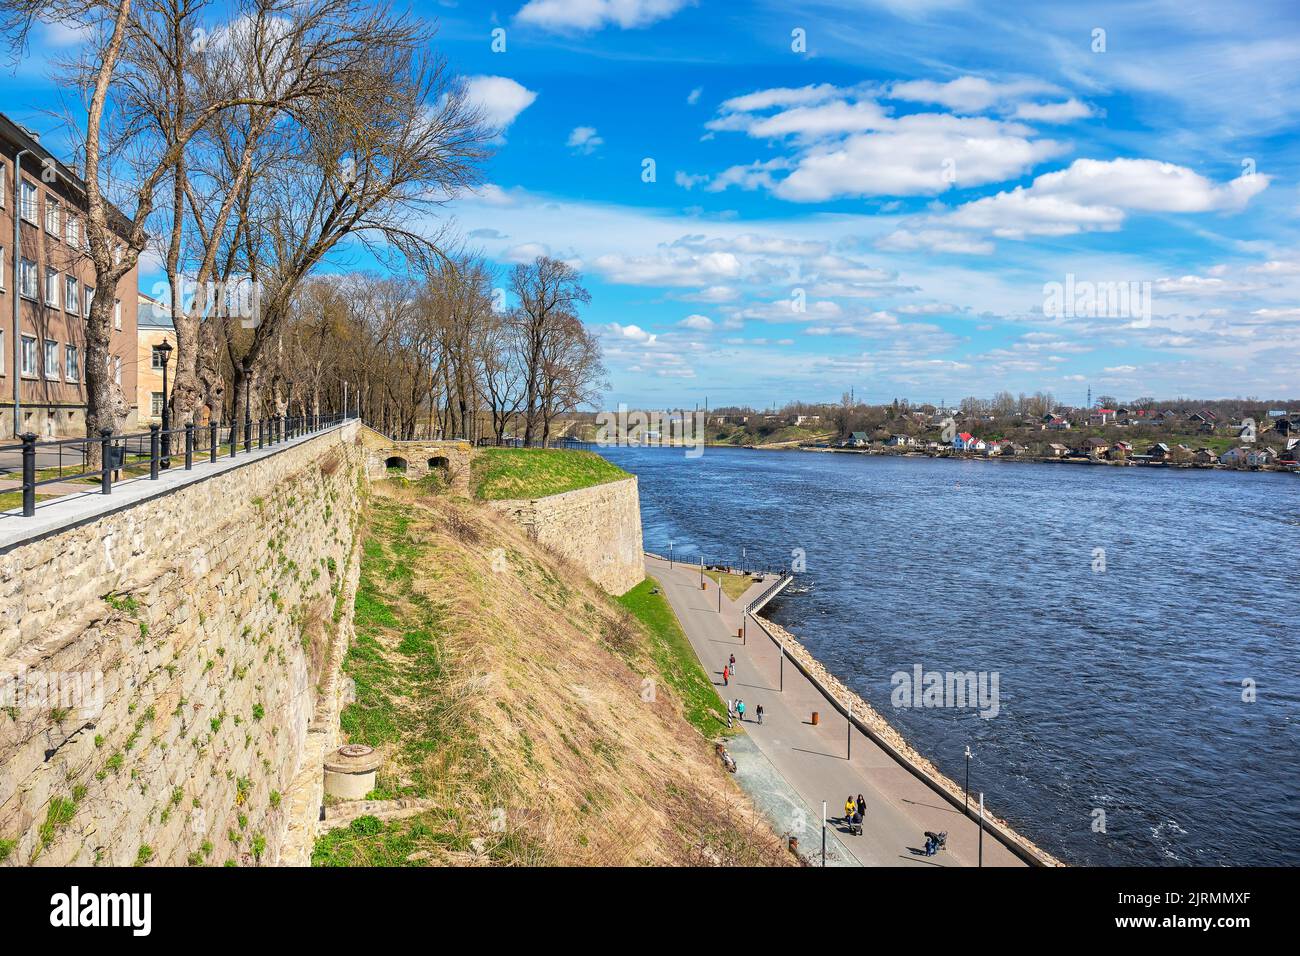 Vue sur la promenade de la ville et la frontière de la rivière Narva. Narva, Estonie, États baltes Banque D'Images